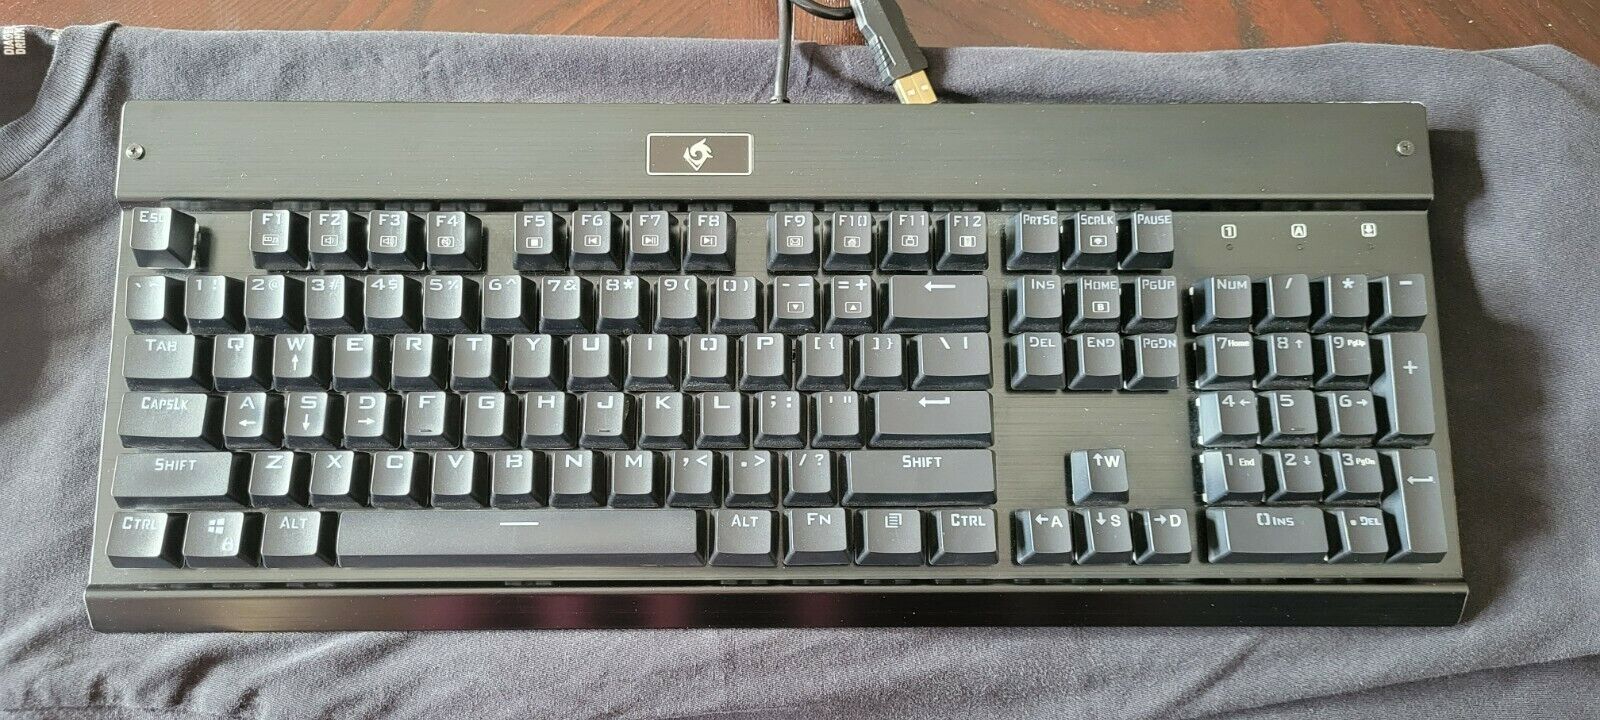 EagleTec KG010 Mechanical Keyboard Cherry MX Blue Switches Backlit